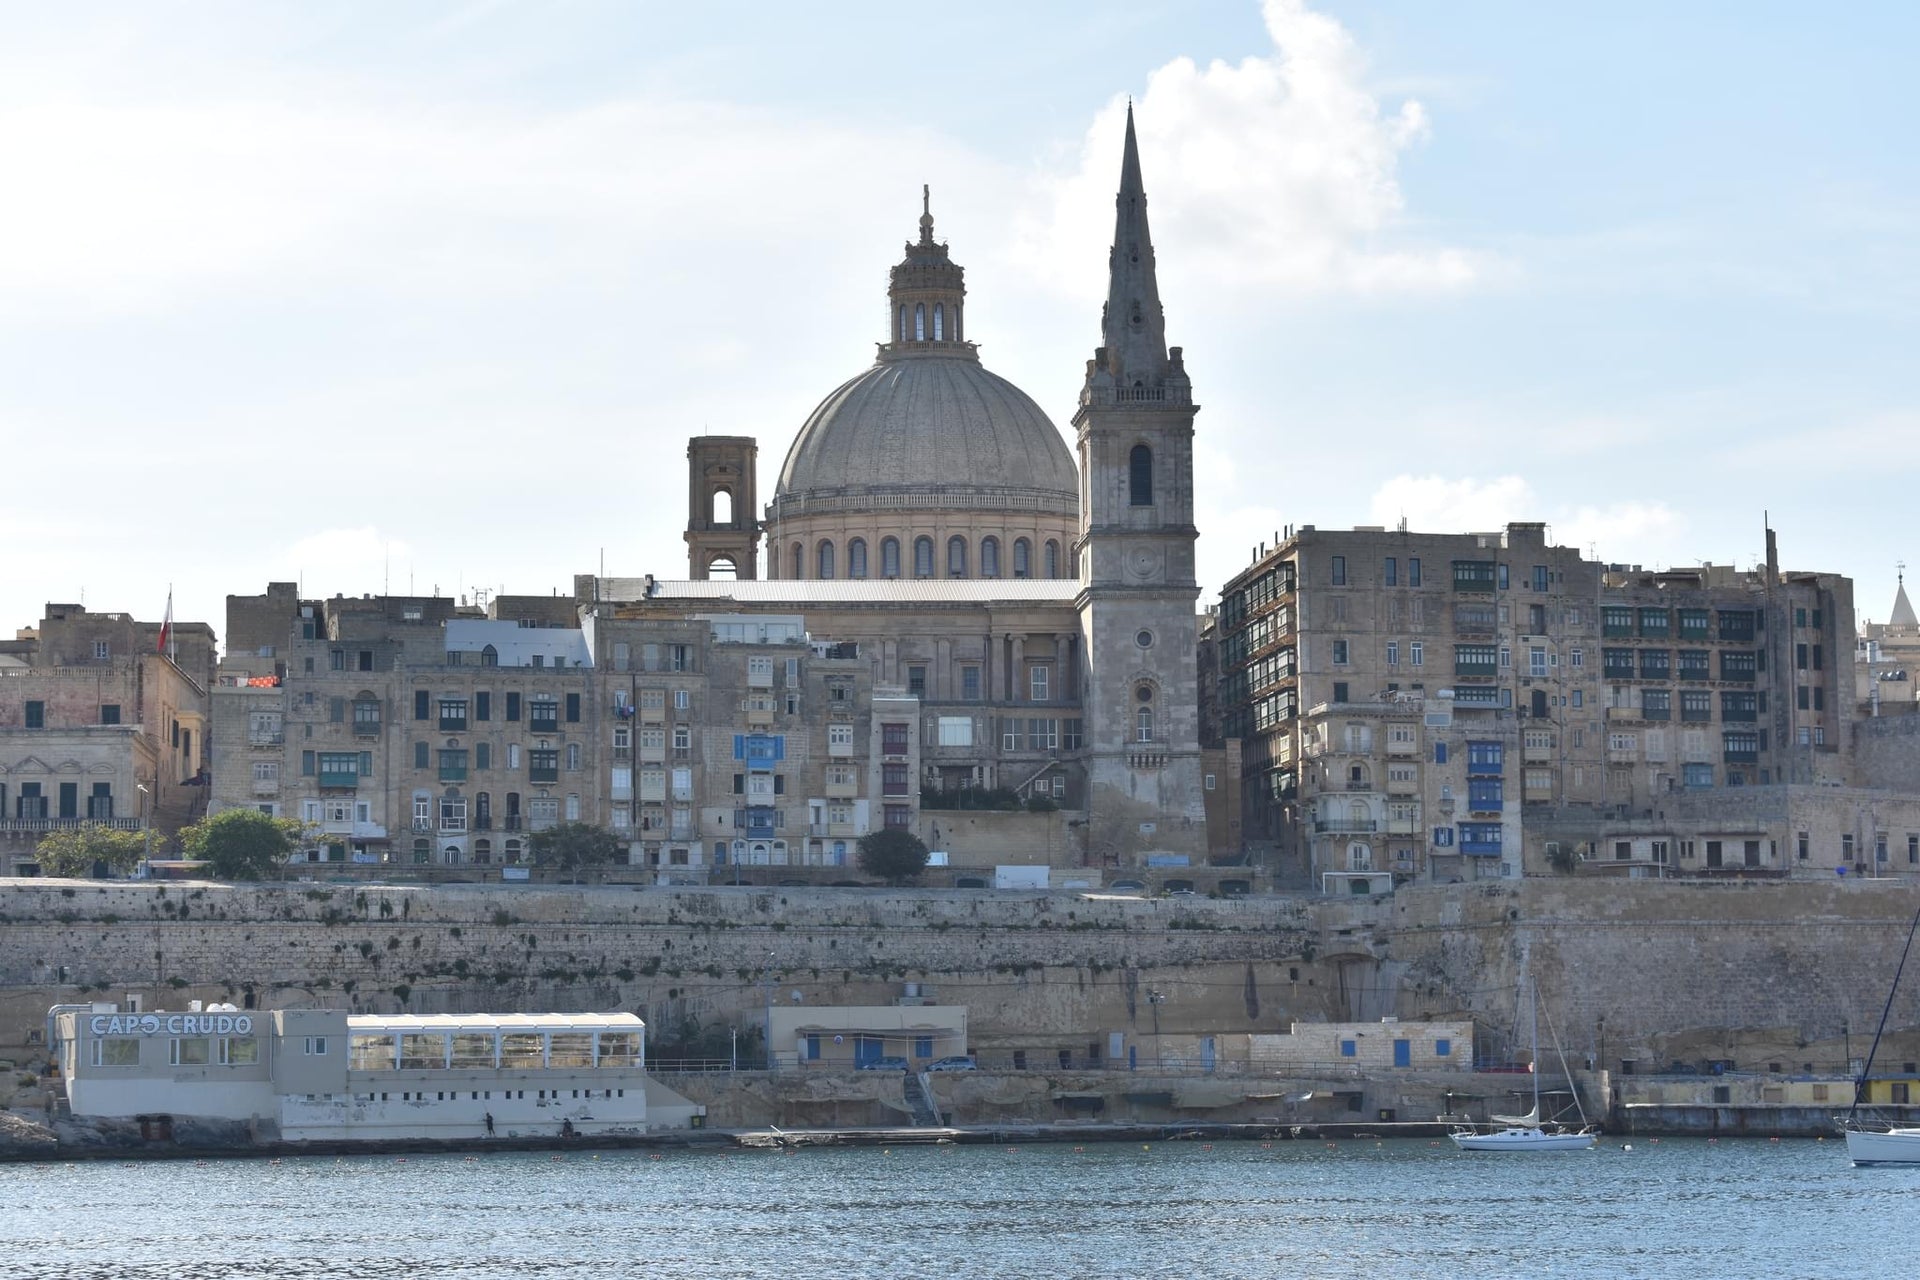 Architecture and Ruins of Malta